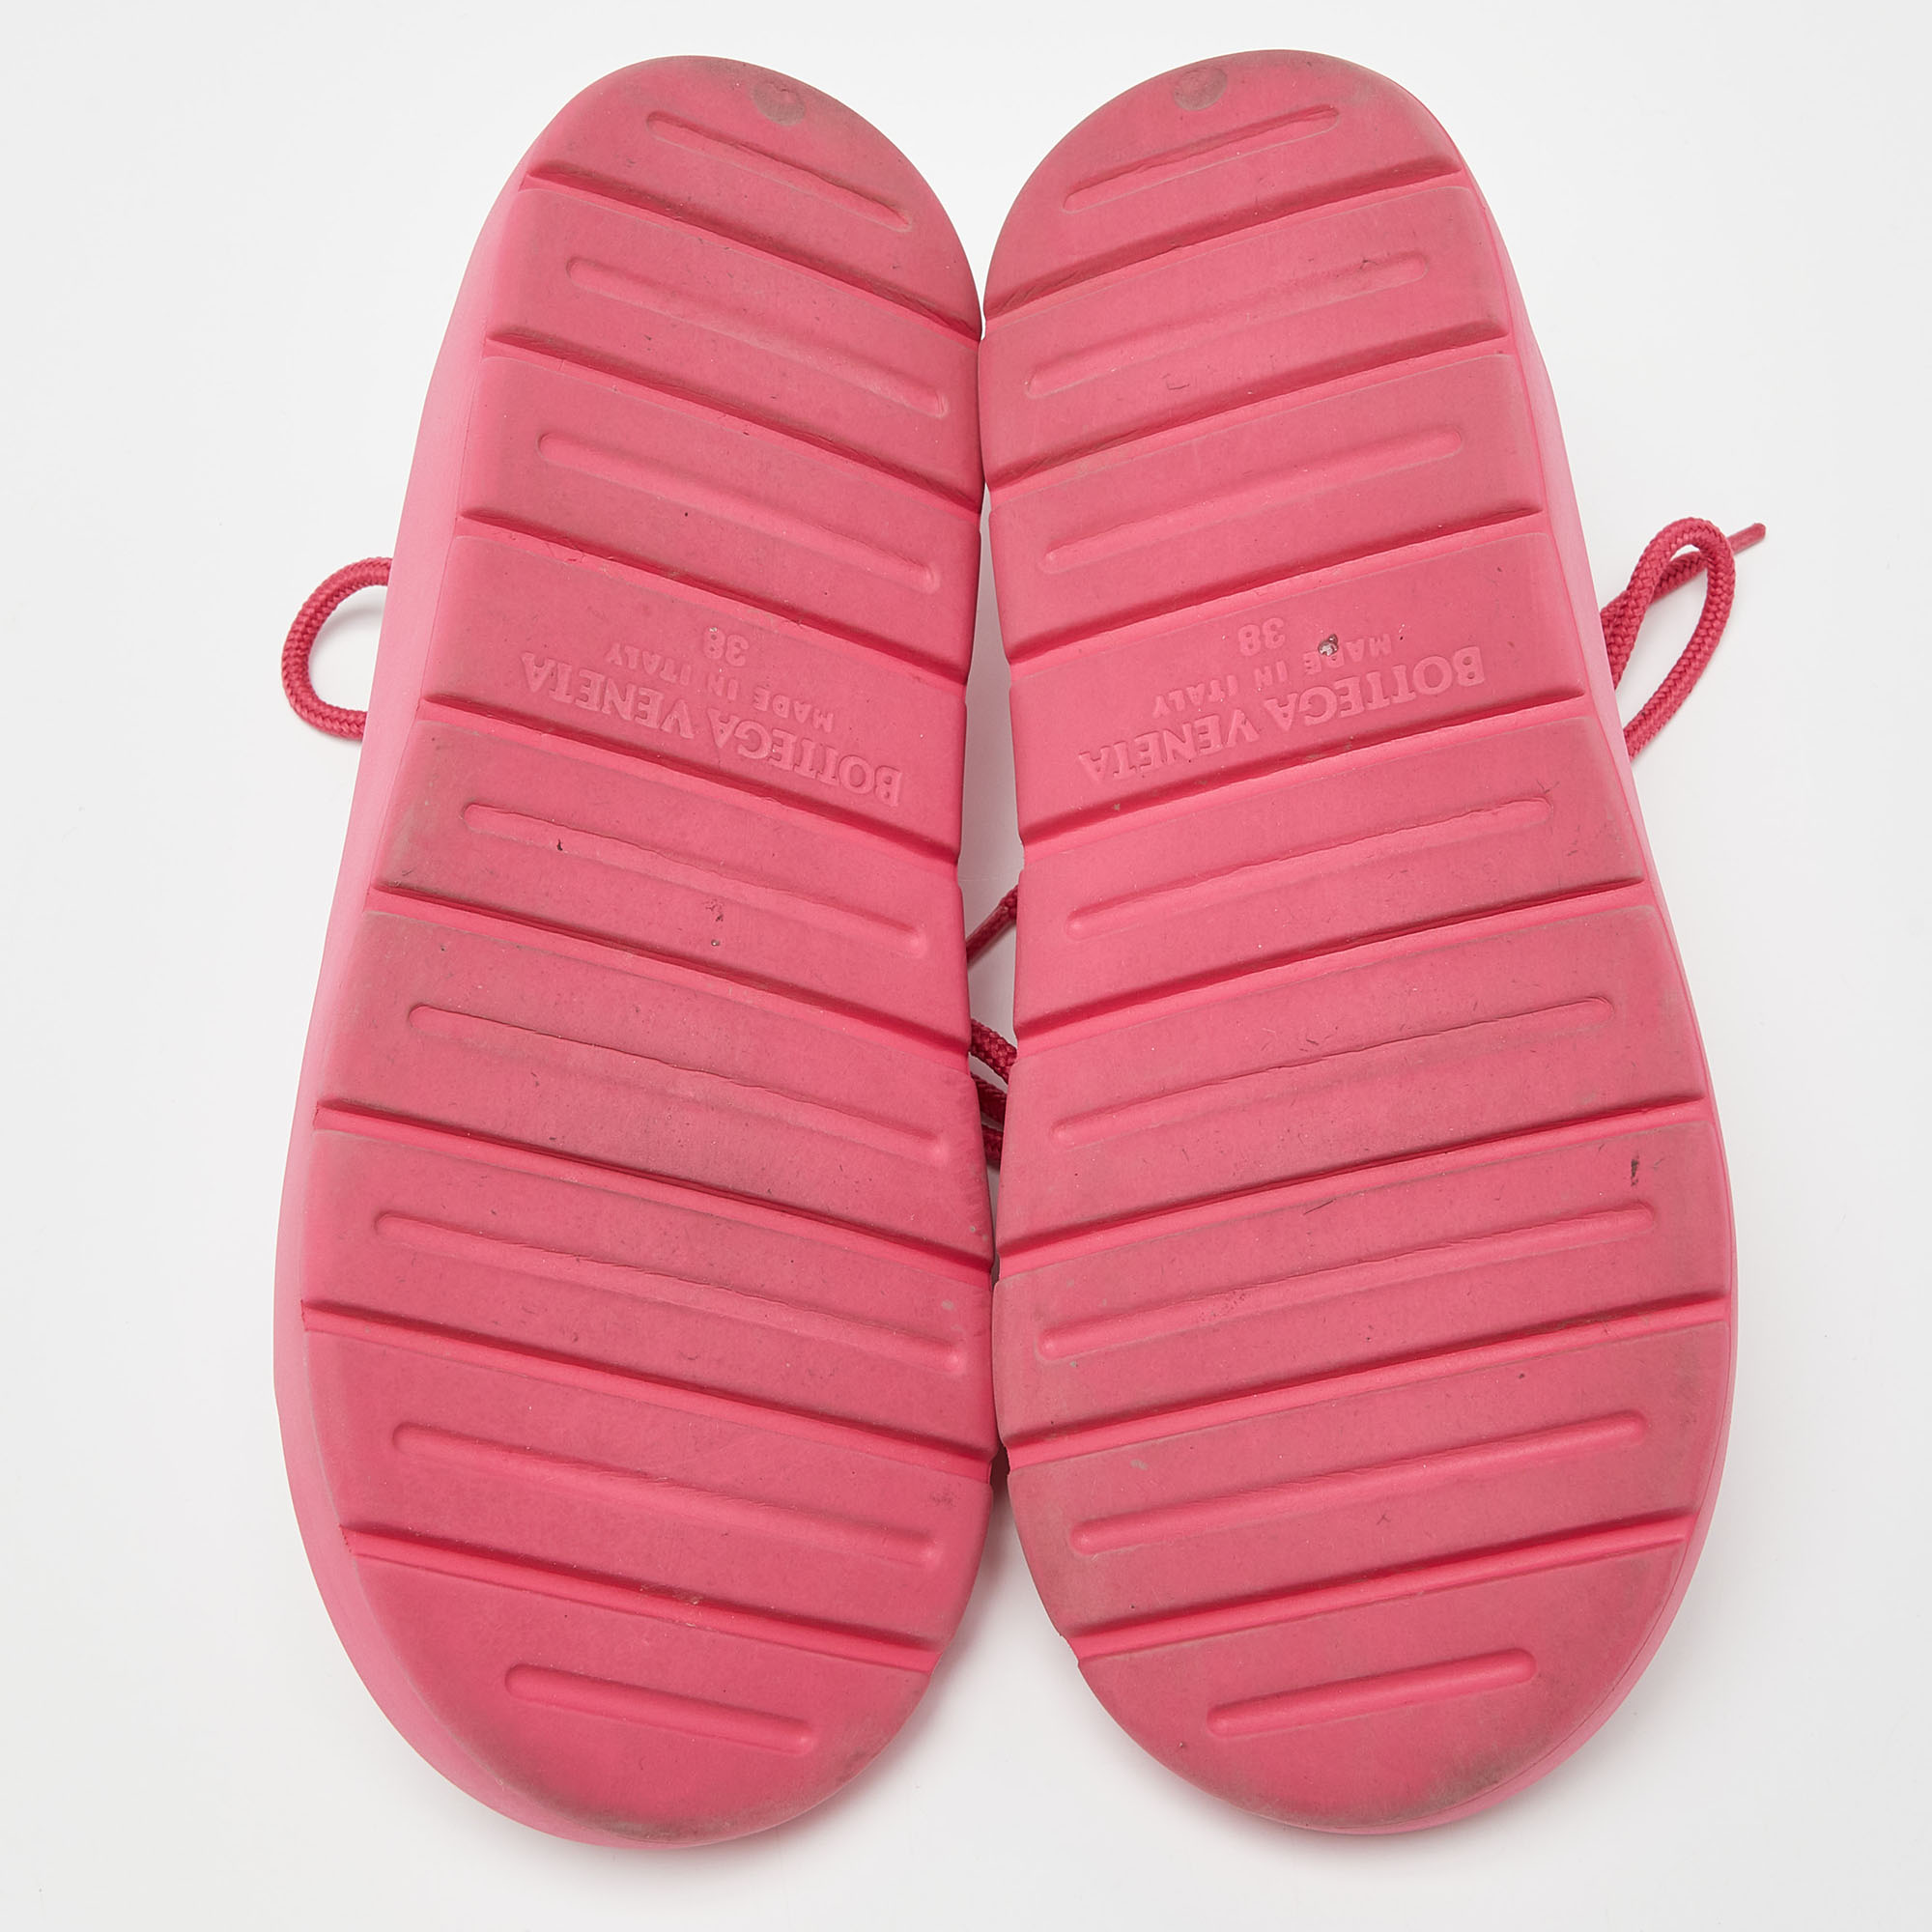 Bottega Veneta Pink Rubber Jelly Sandals Size 38